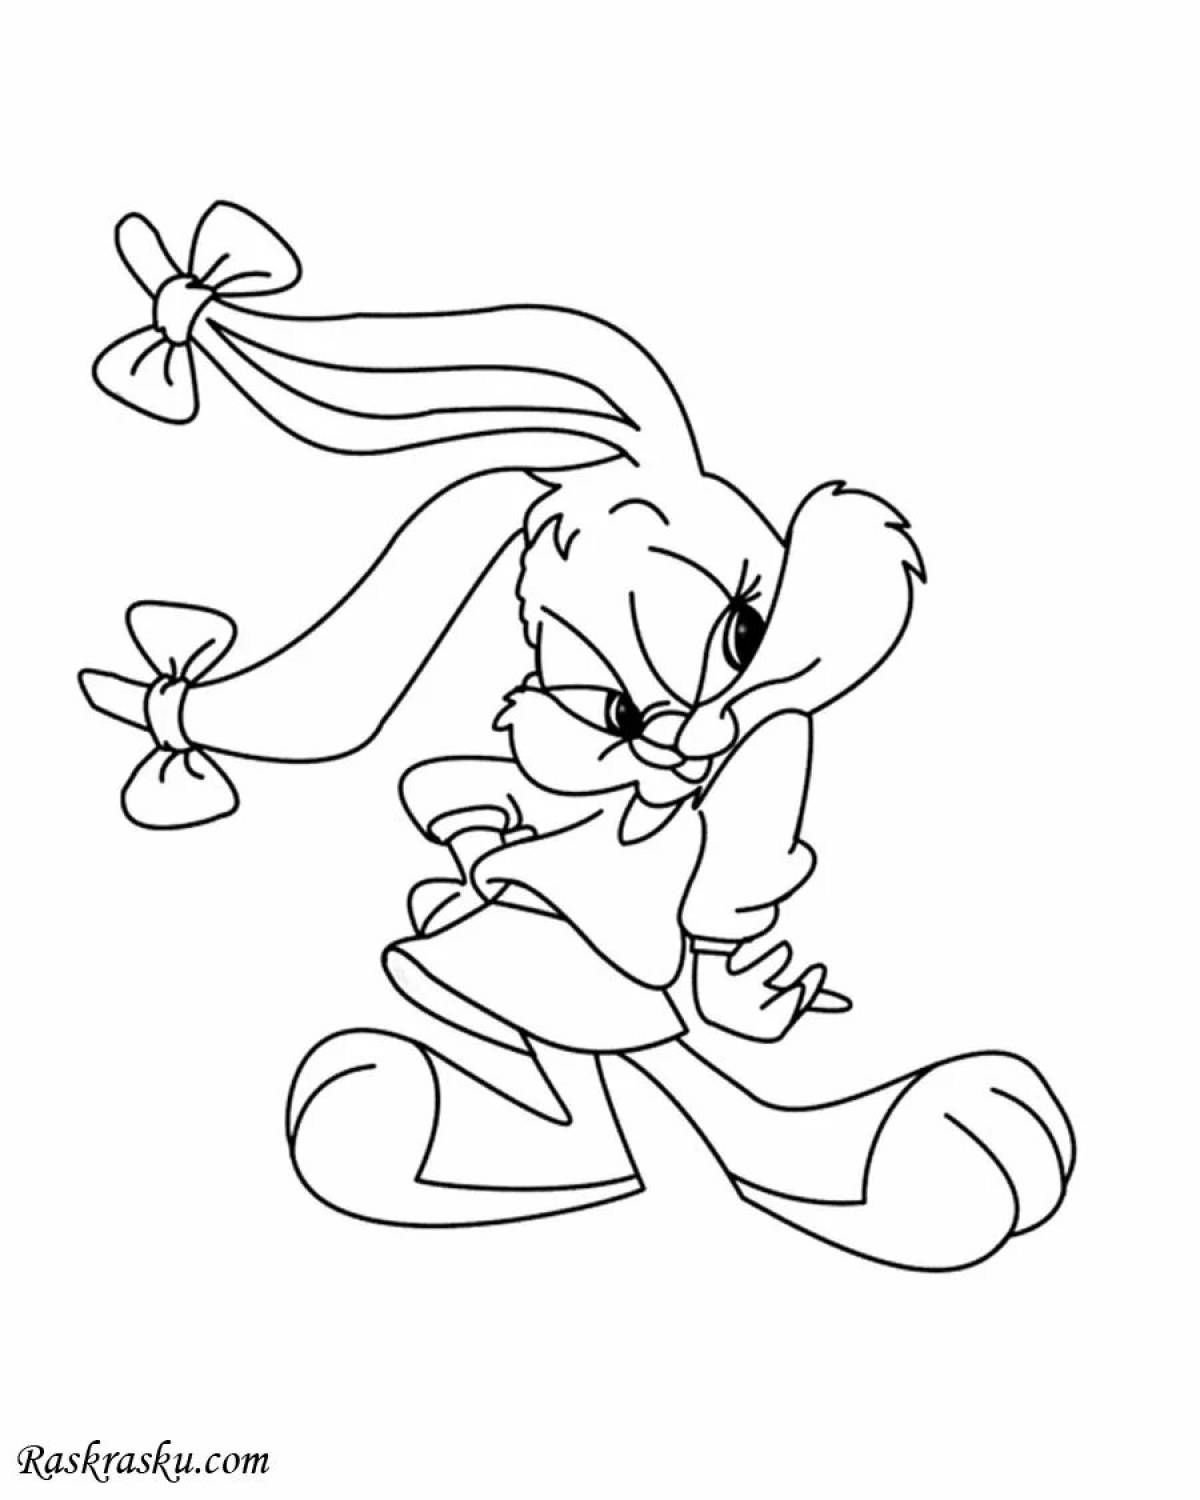 Bunny with a bow #5